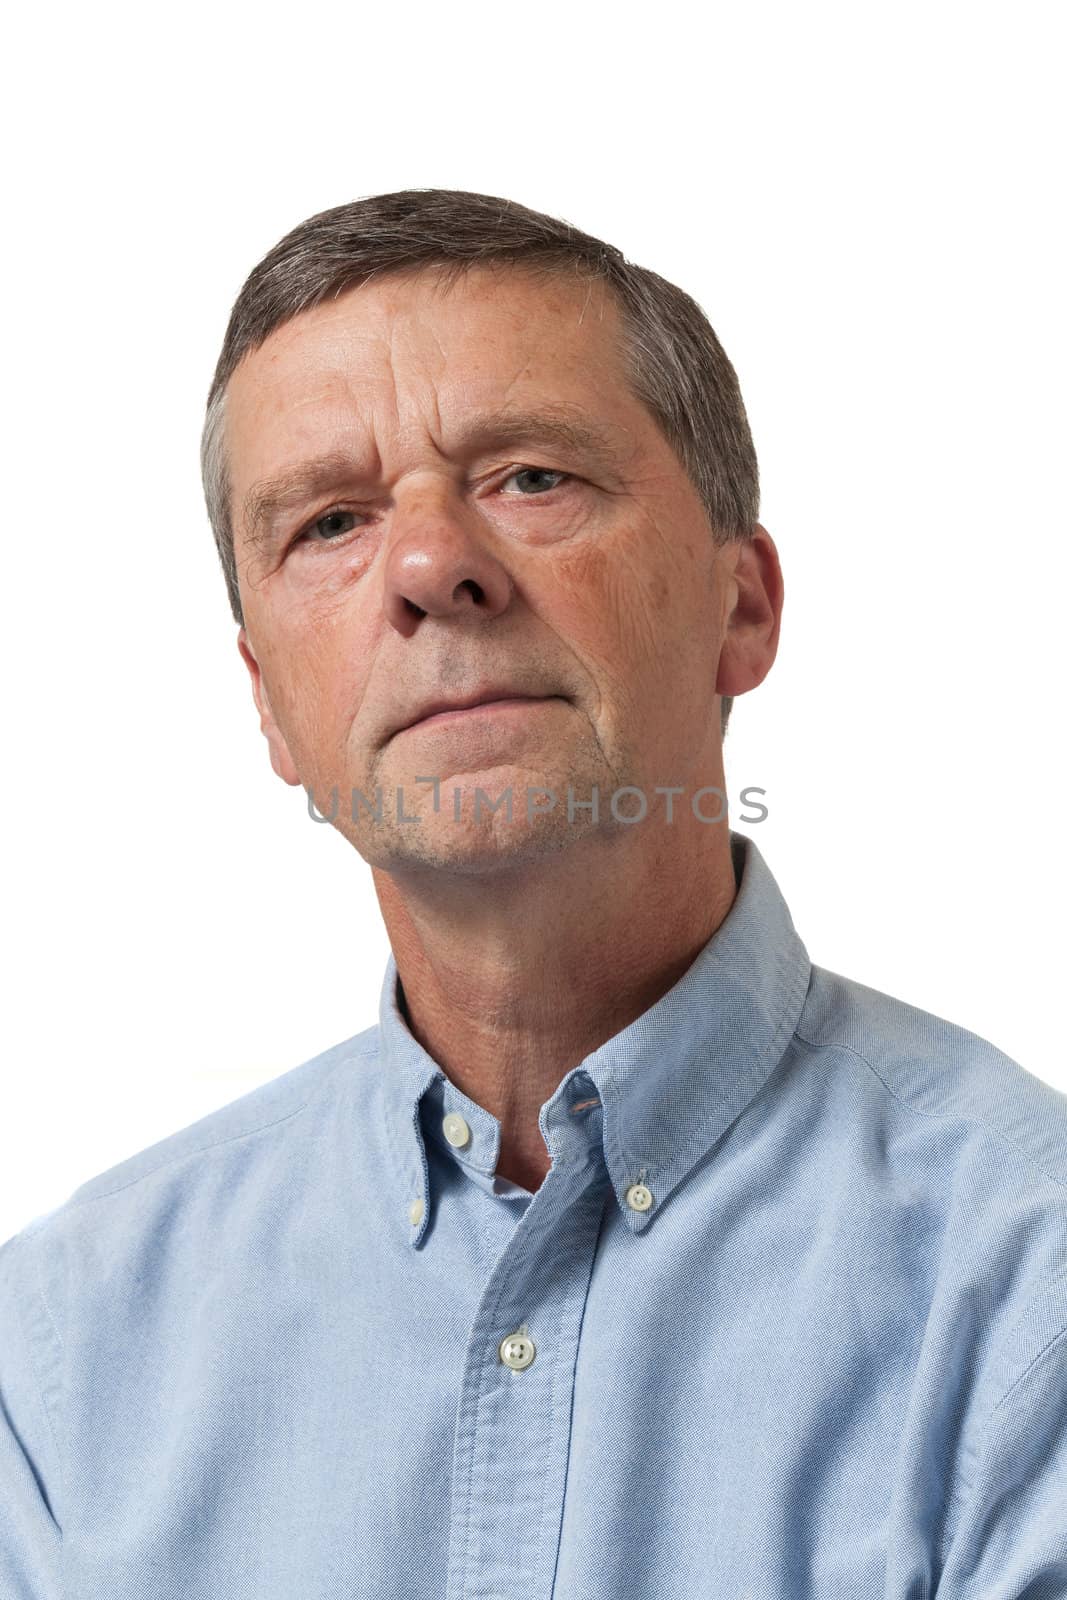 Senior man in blue shirt looks pensive by steheap